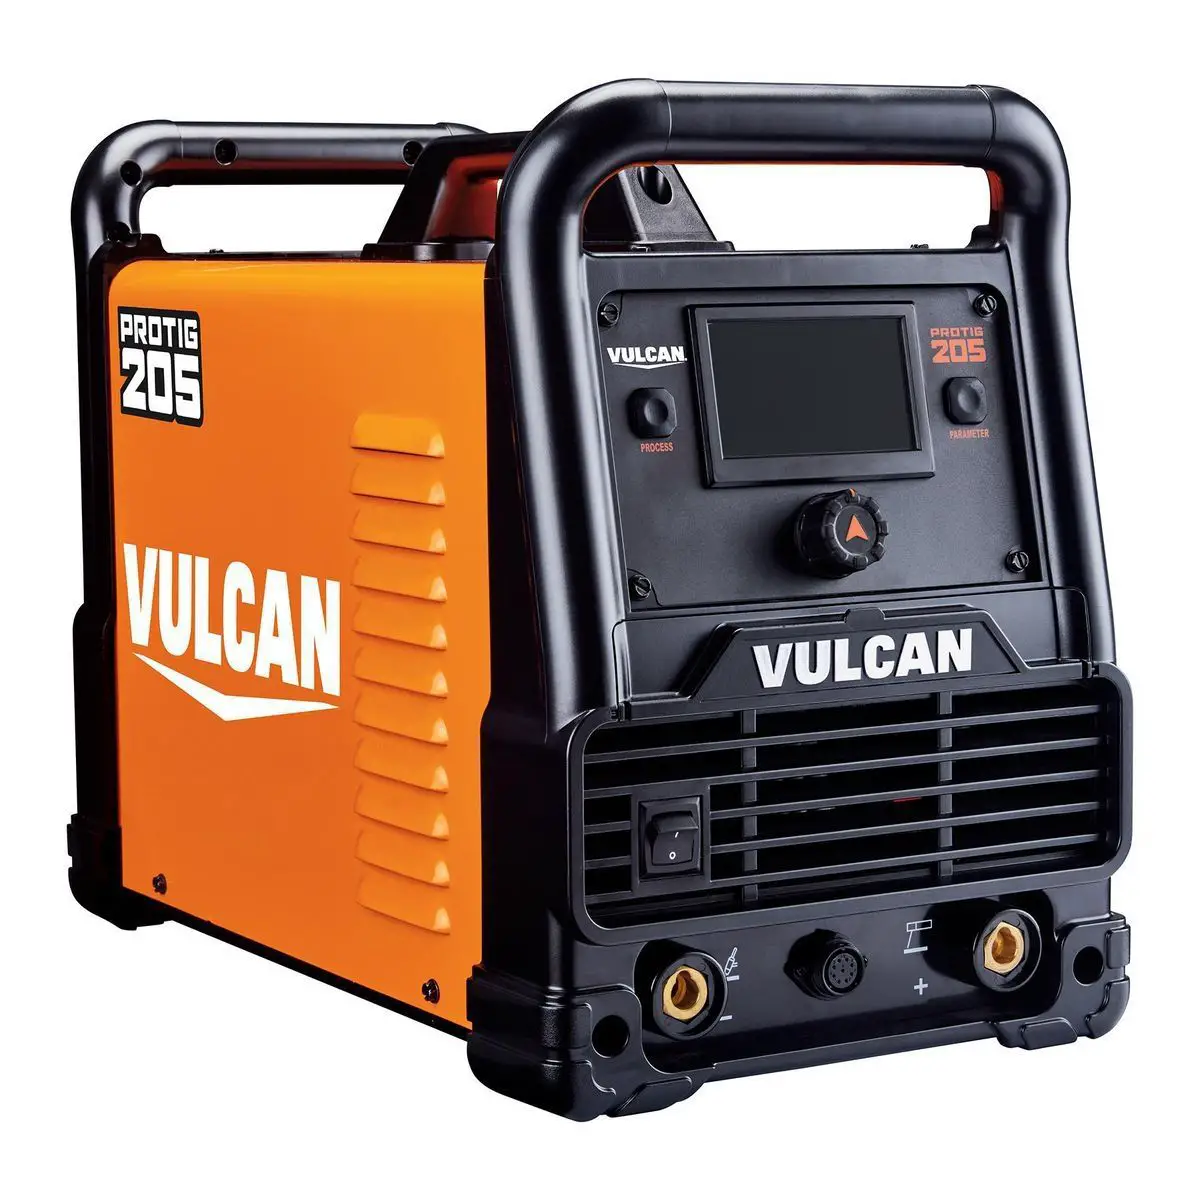 Vulcan 205 TIG Welding Machine Review